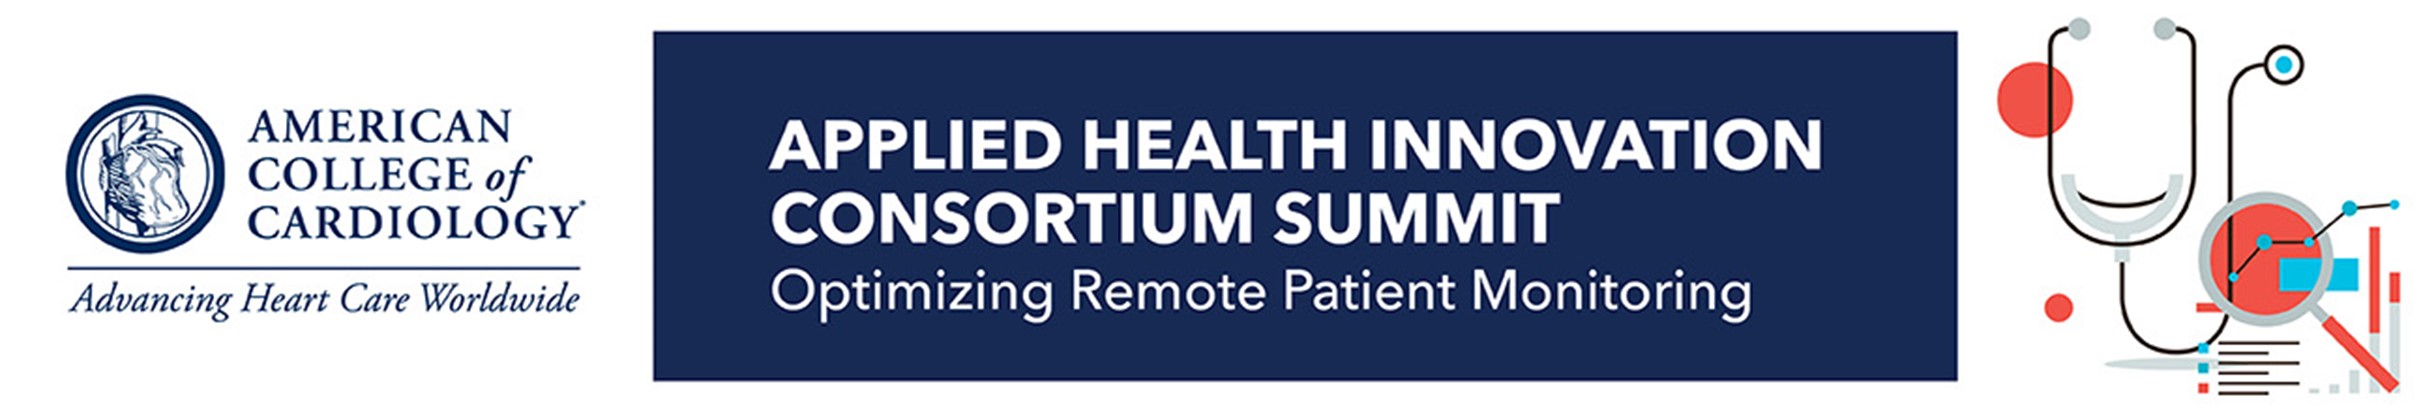 Applied Health Innovation Consortium Summit